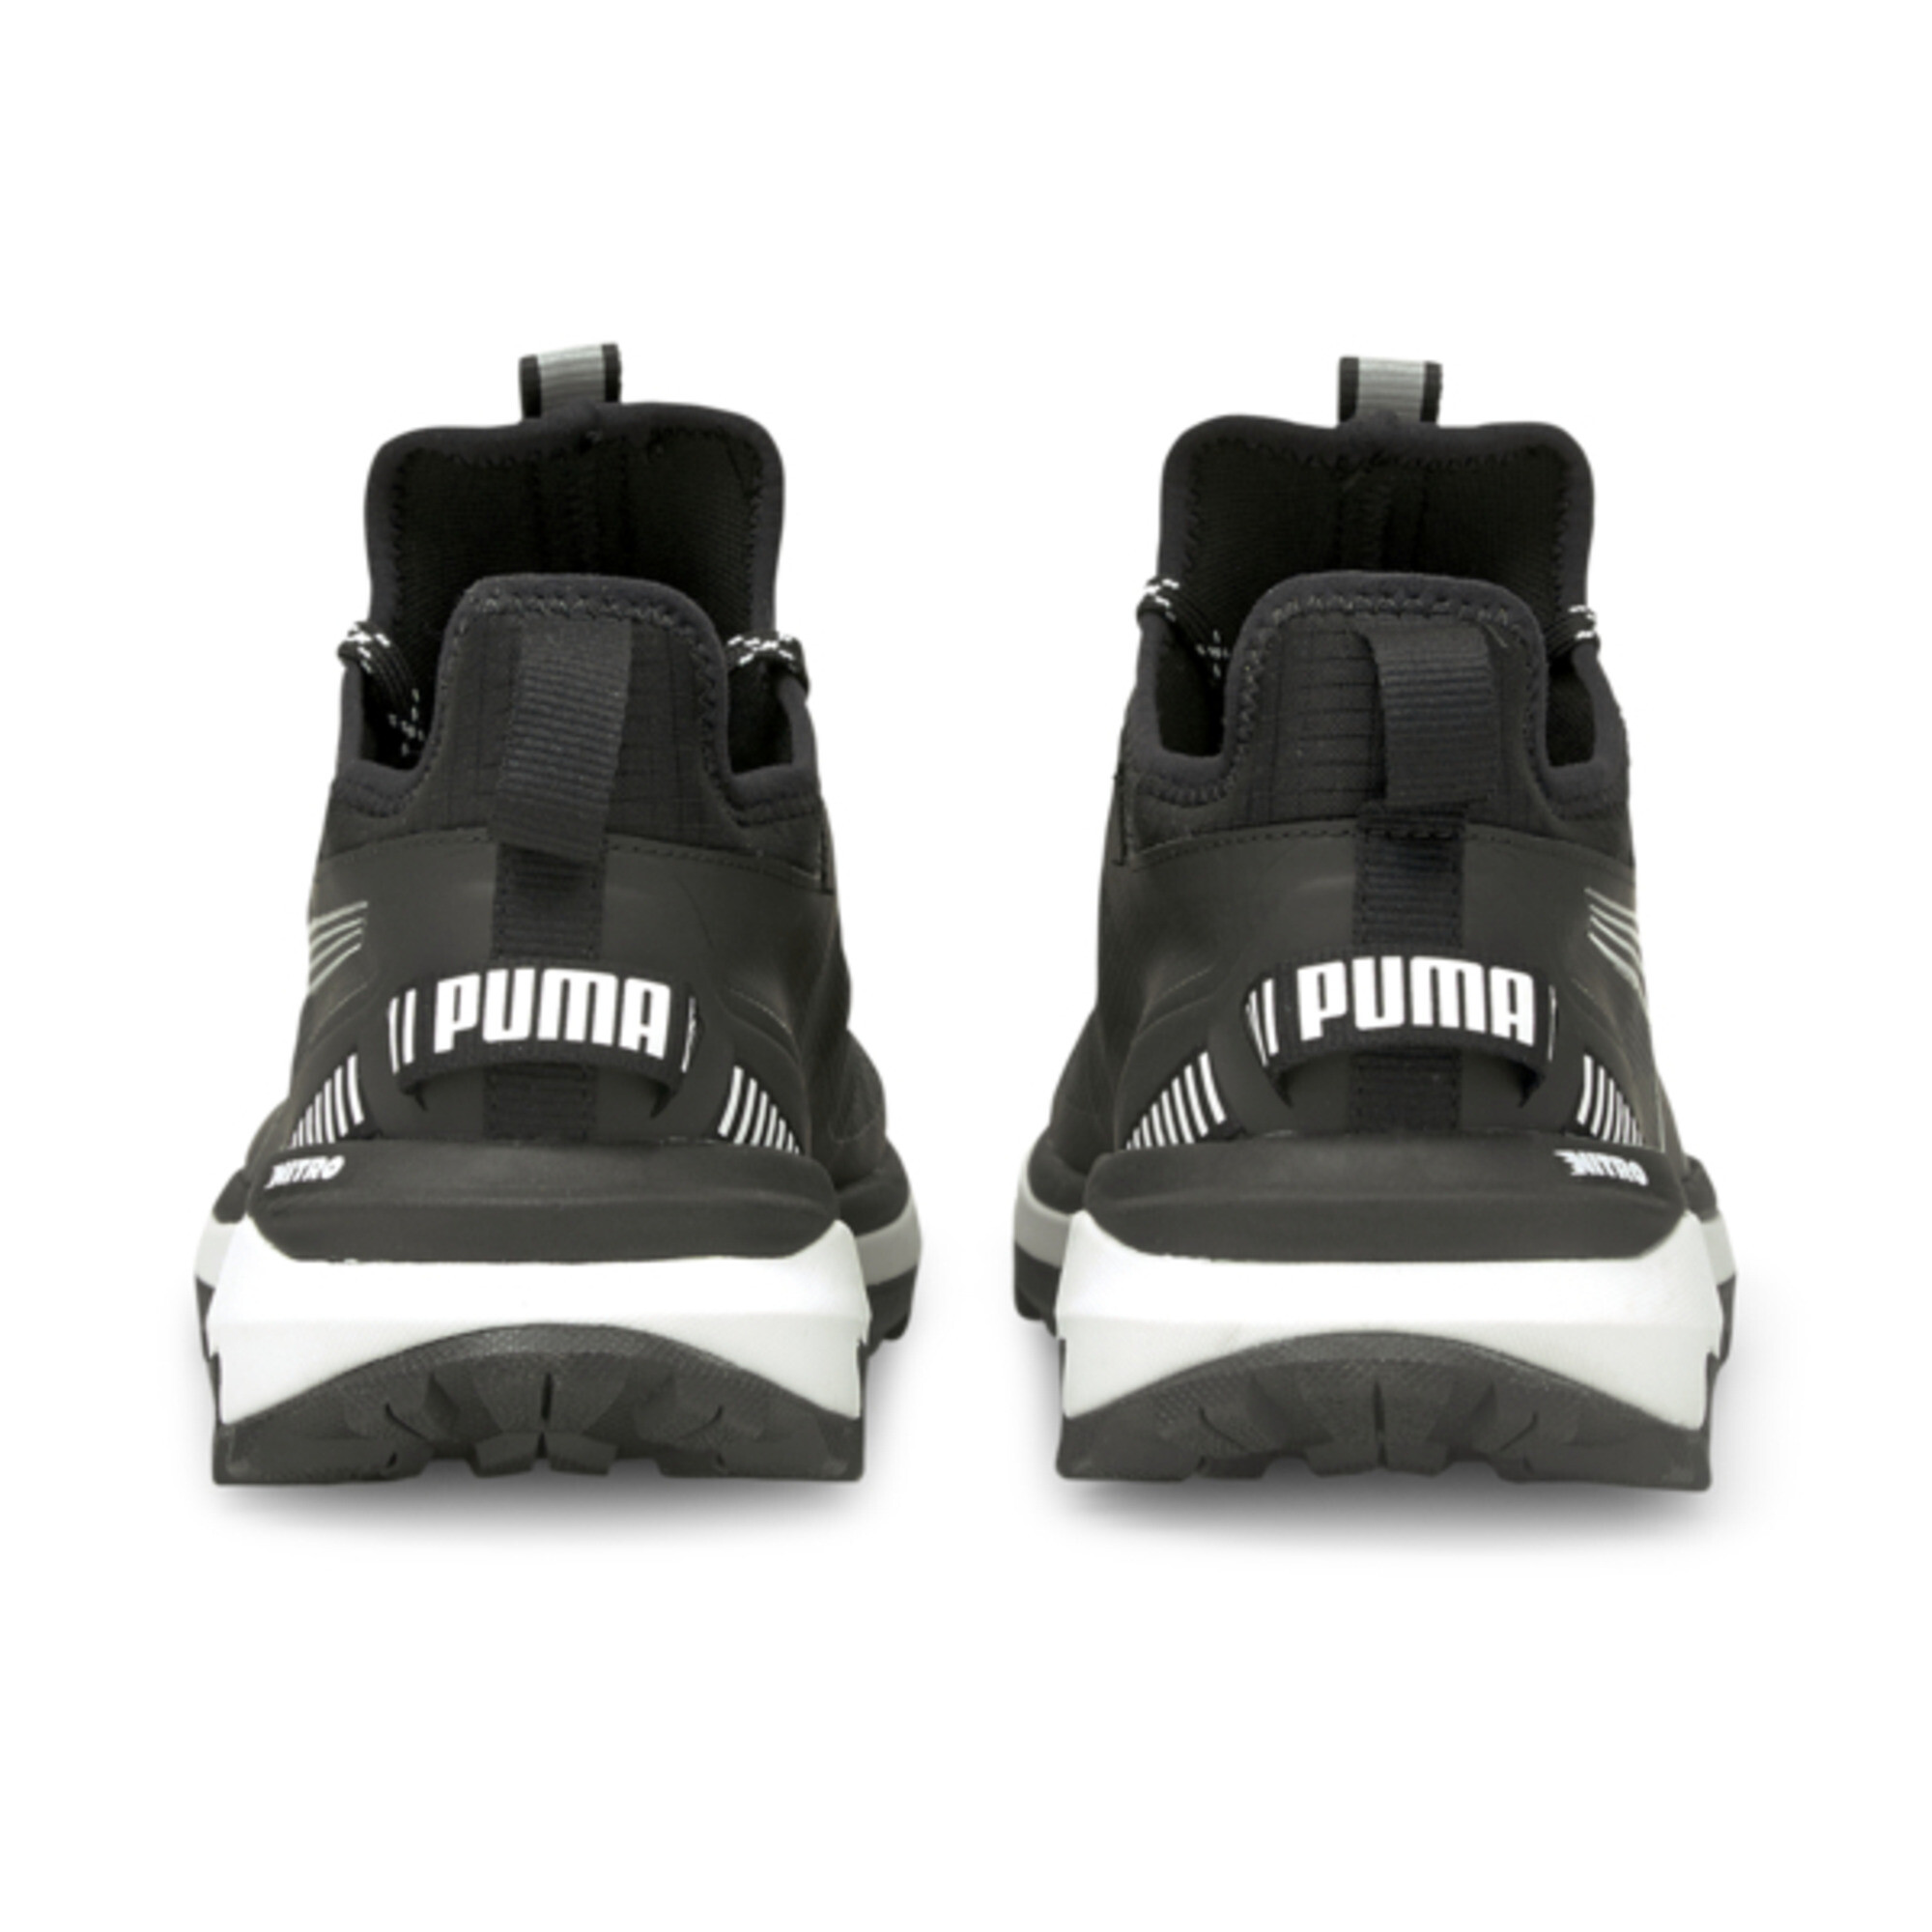 Men's PUMA Voyage Nitro Trail Running Shoes In 10 - Black, Size EU 48.5